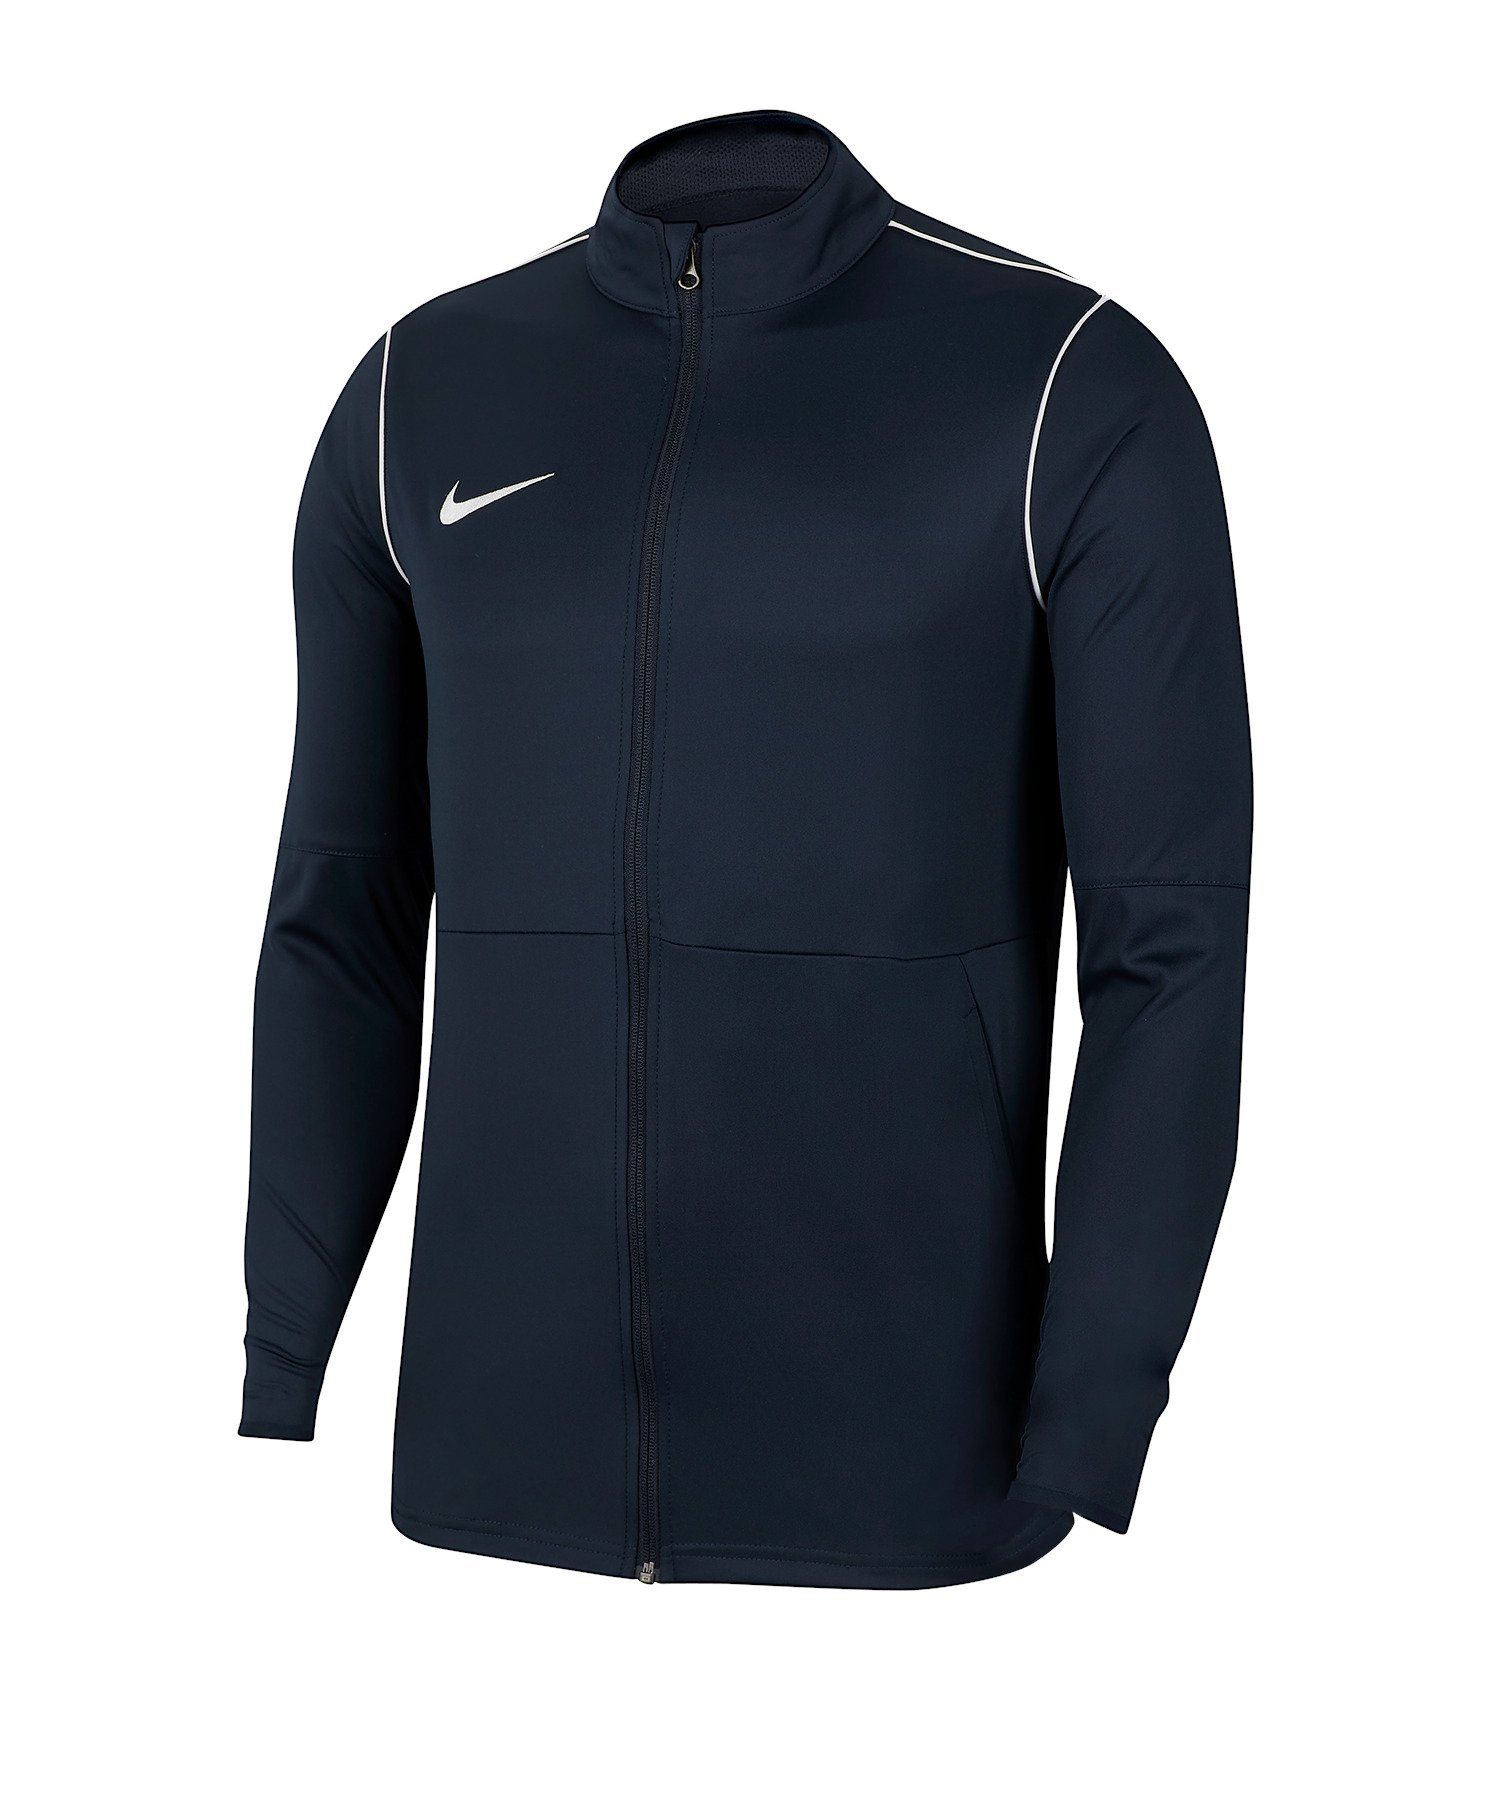 Sweatjacke Training Park 20 Jacke blau Nike